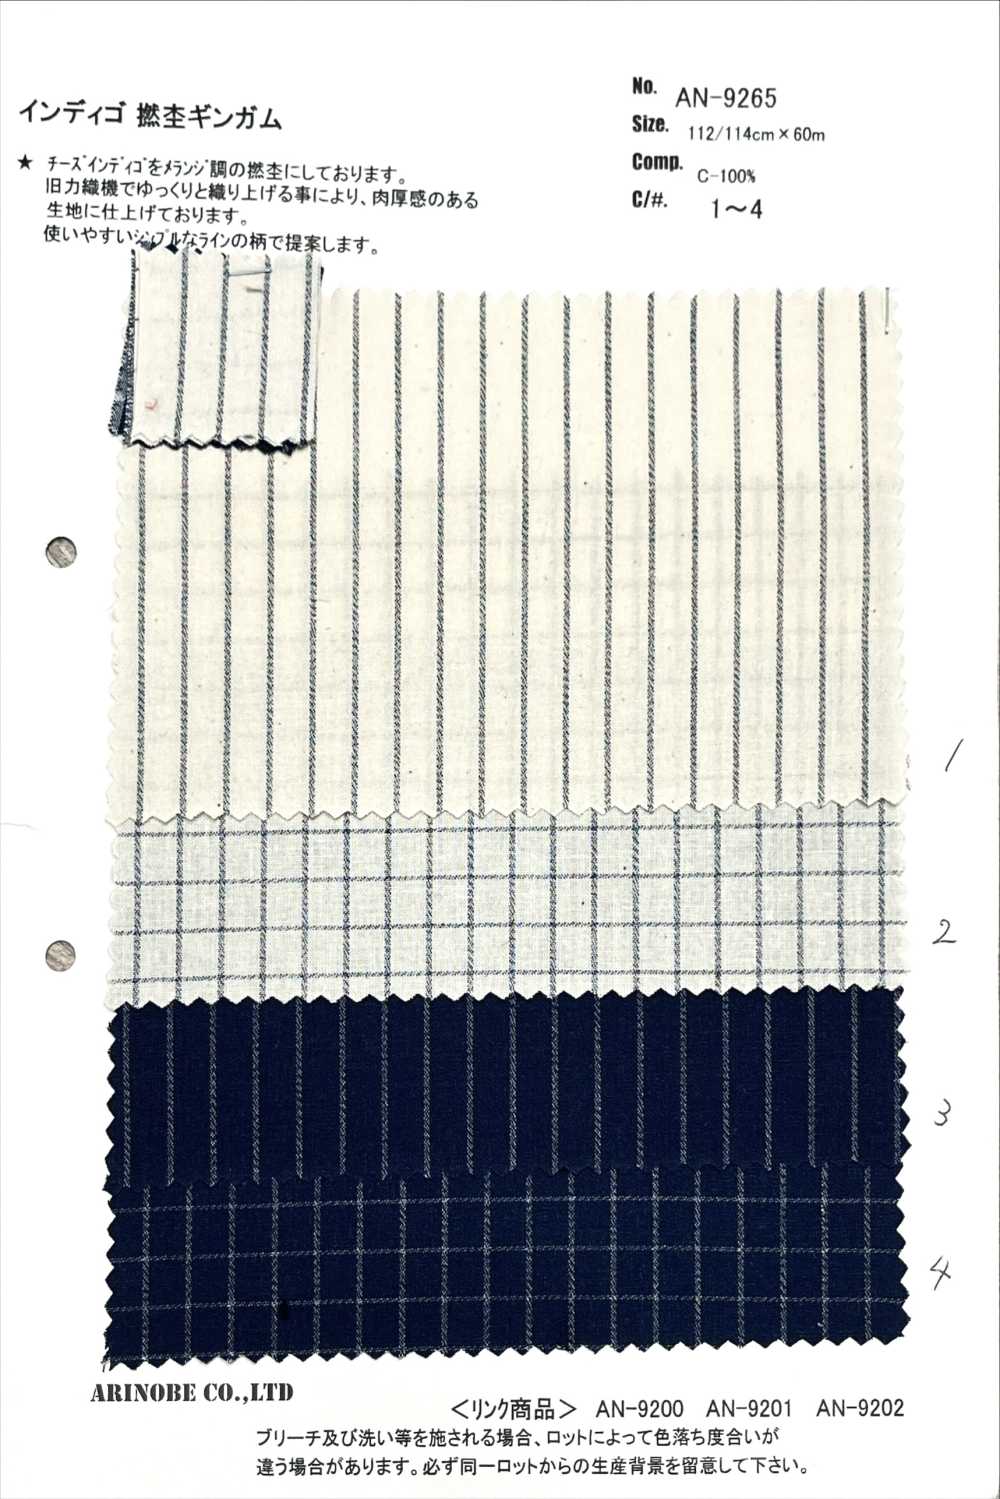 AN-9265 Indigo Twisted Gingham[Textile / Fabric] ARINOBE CO., LTD.